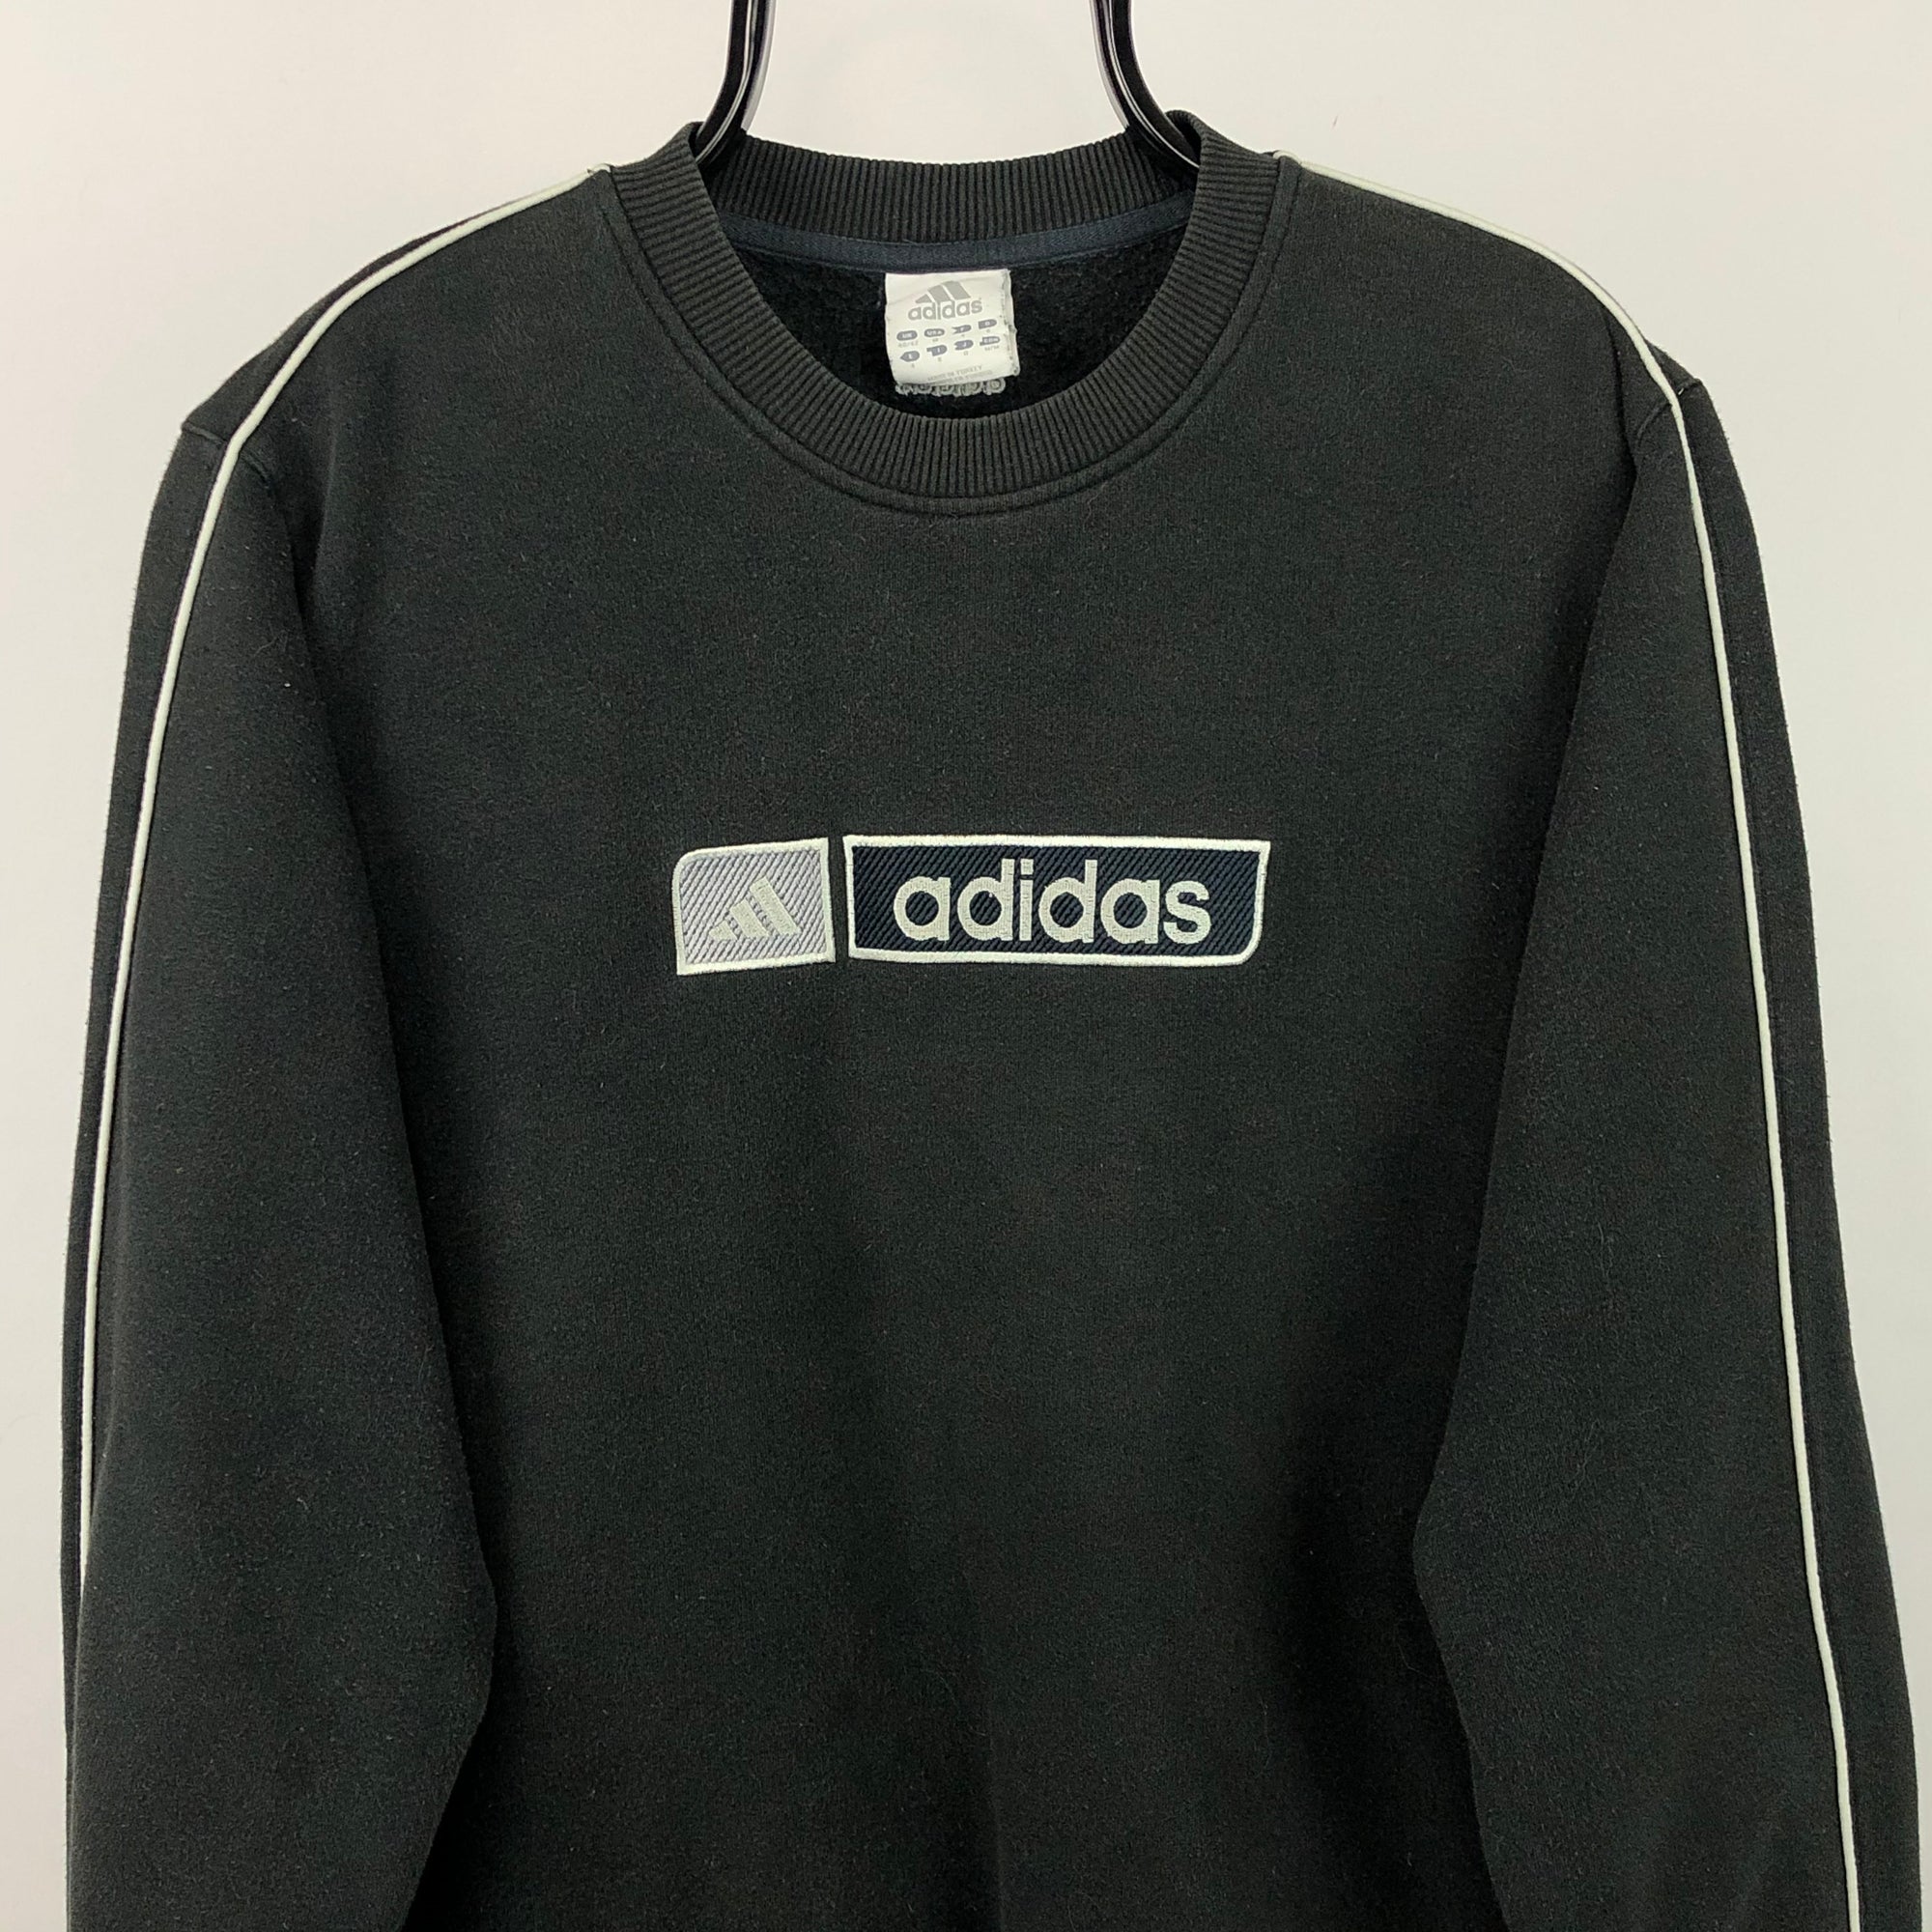 Vintage Adidas Spellout Sweatshirt in Black - Men's Medium/Women's Large